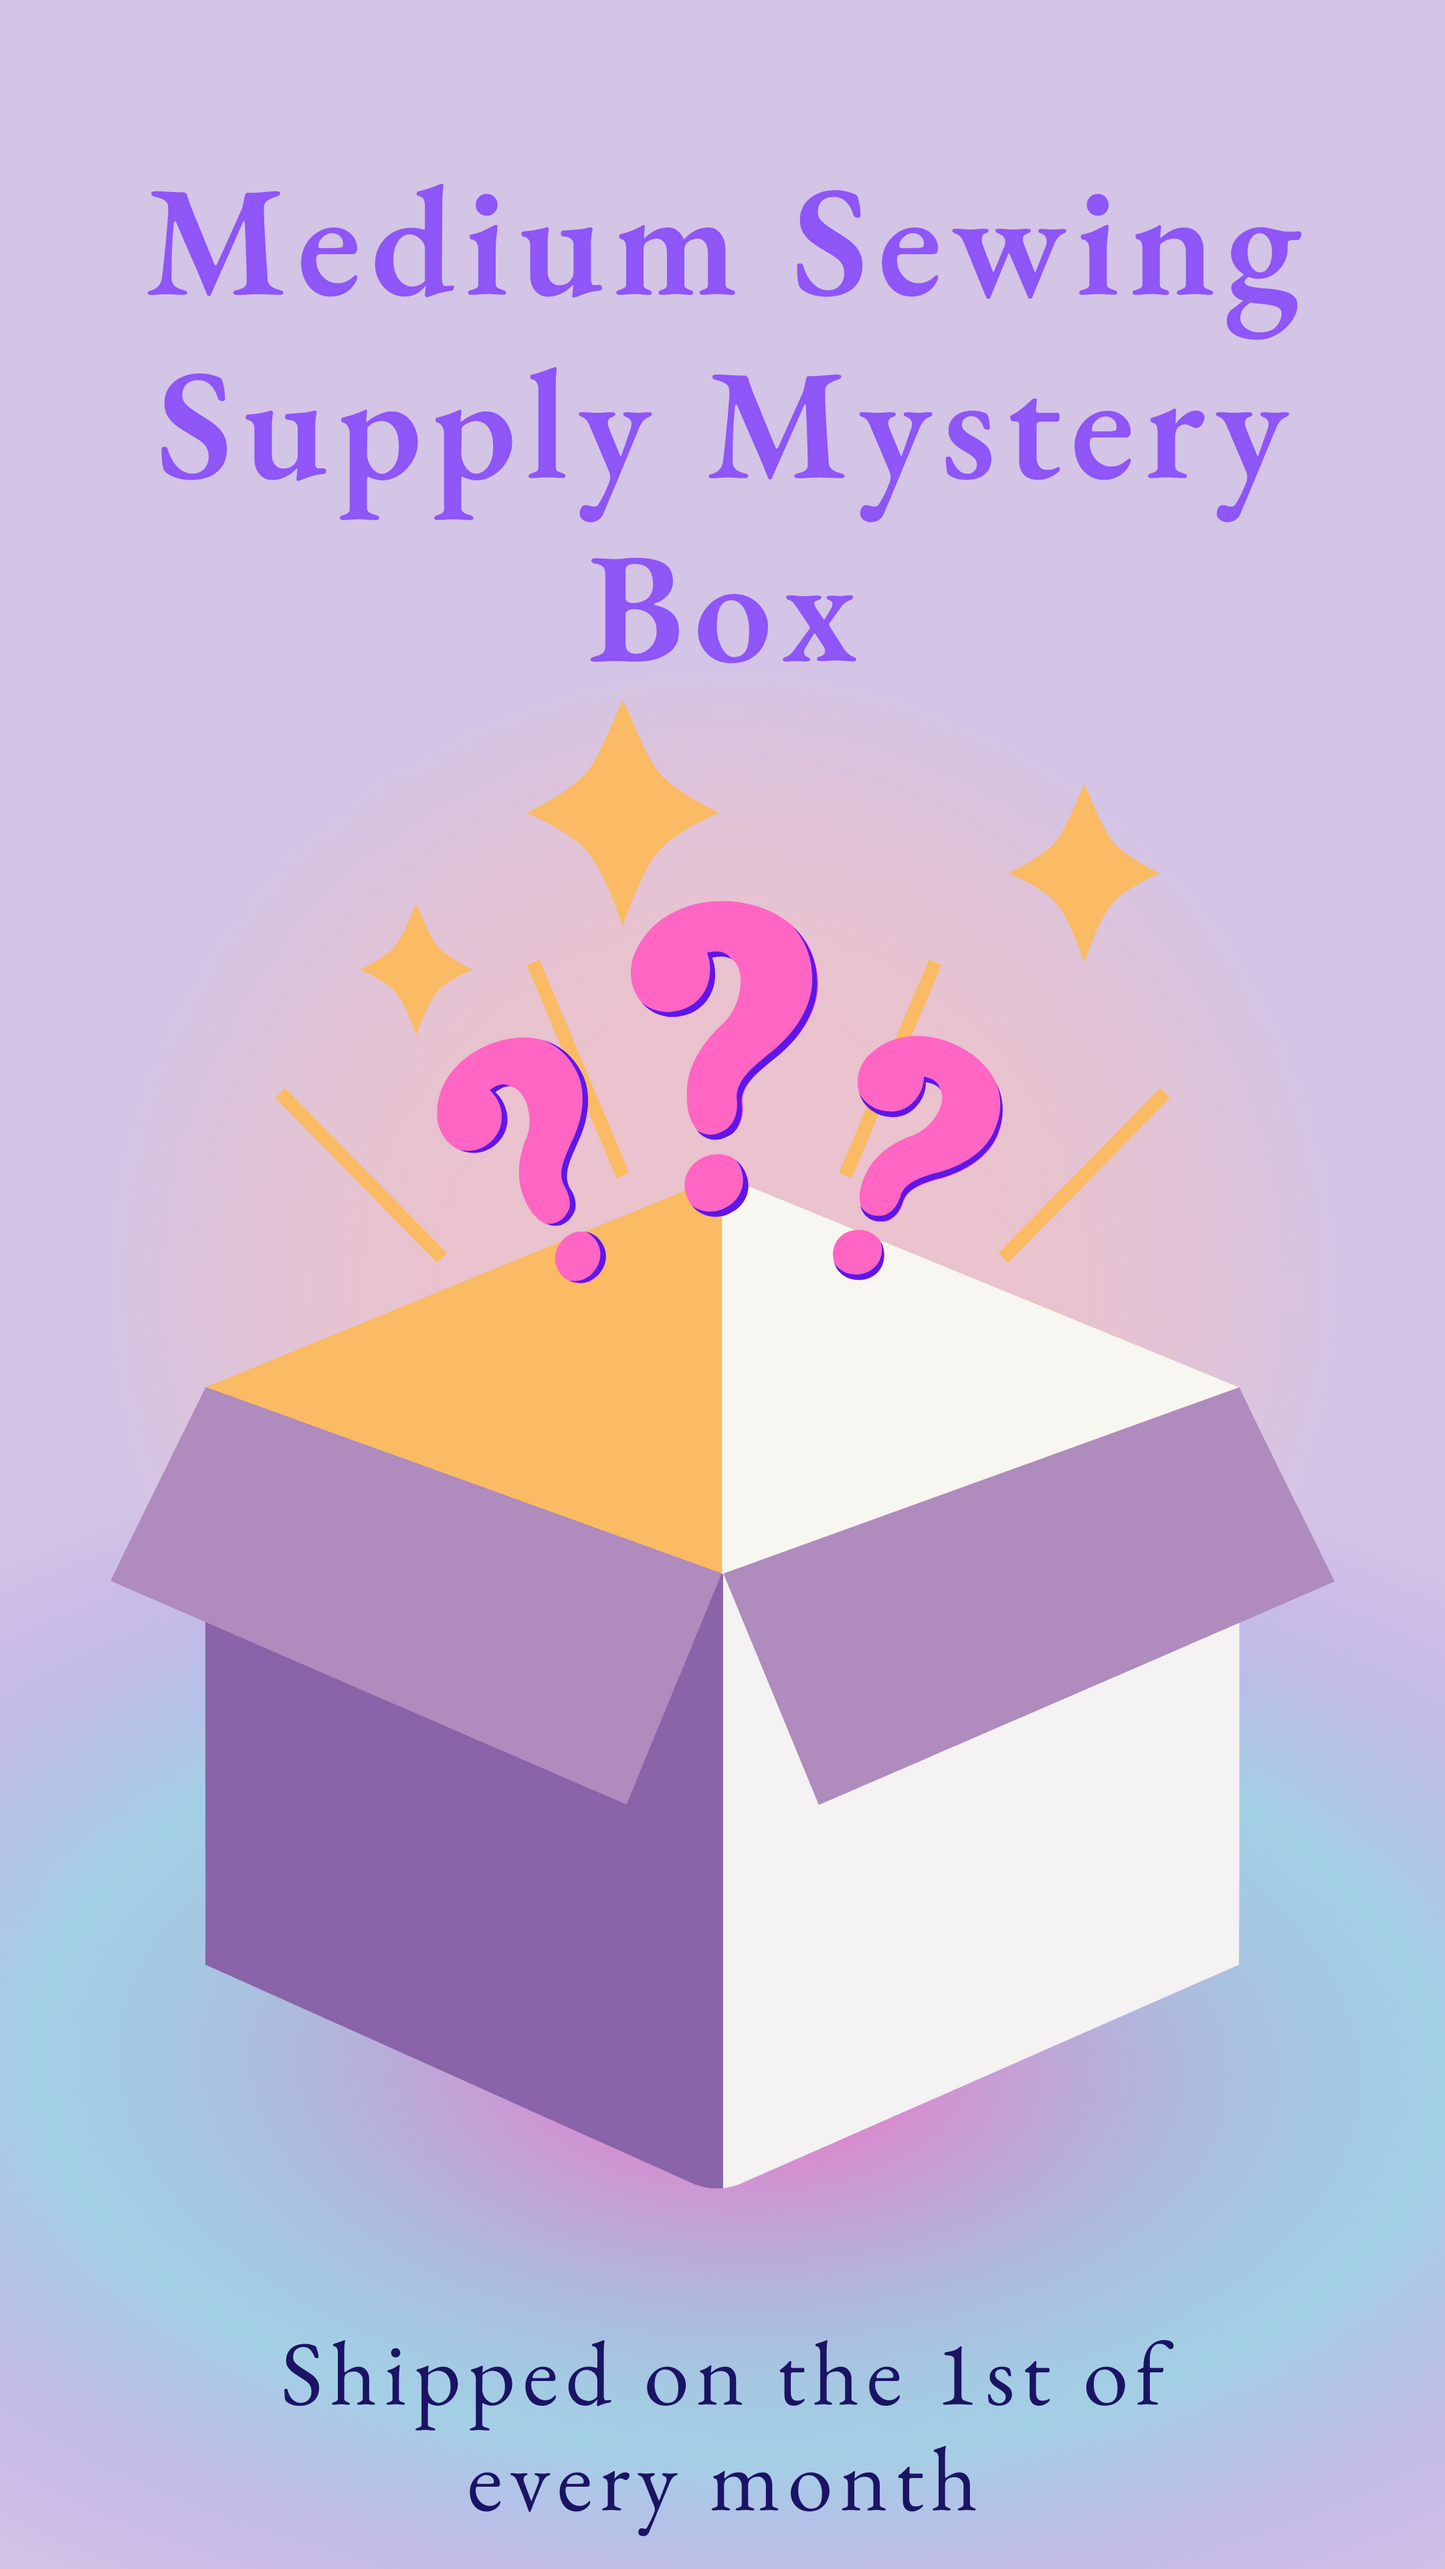 Medium Sewing Supply Mystery Box